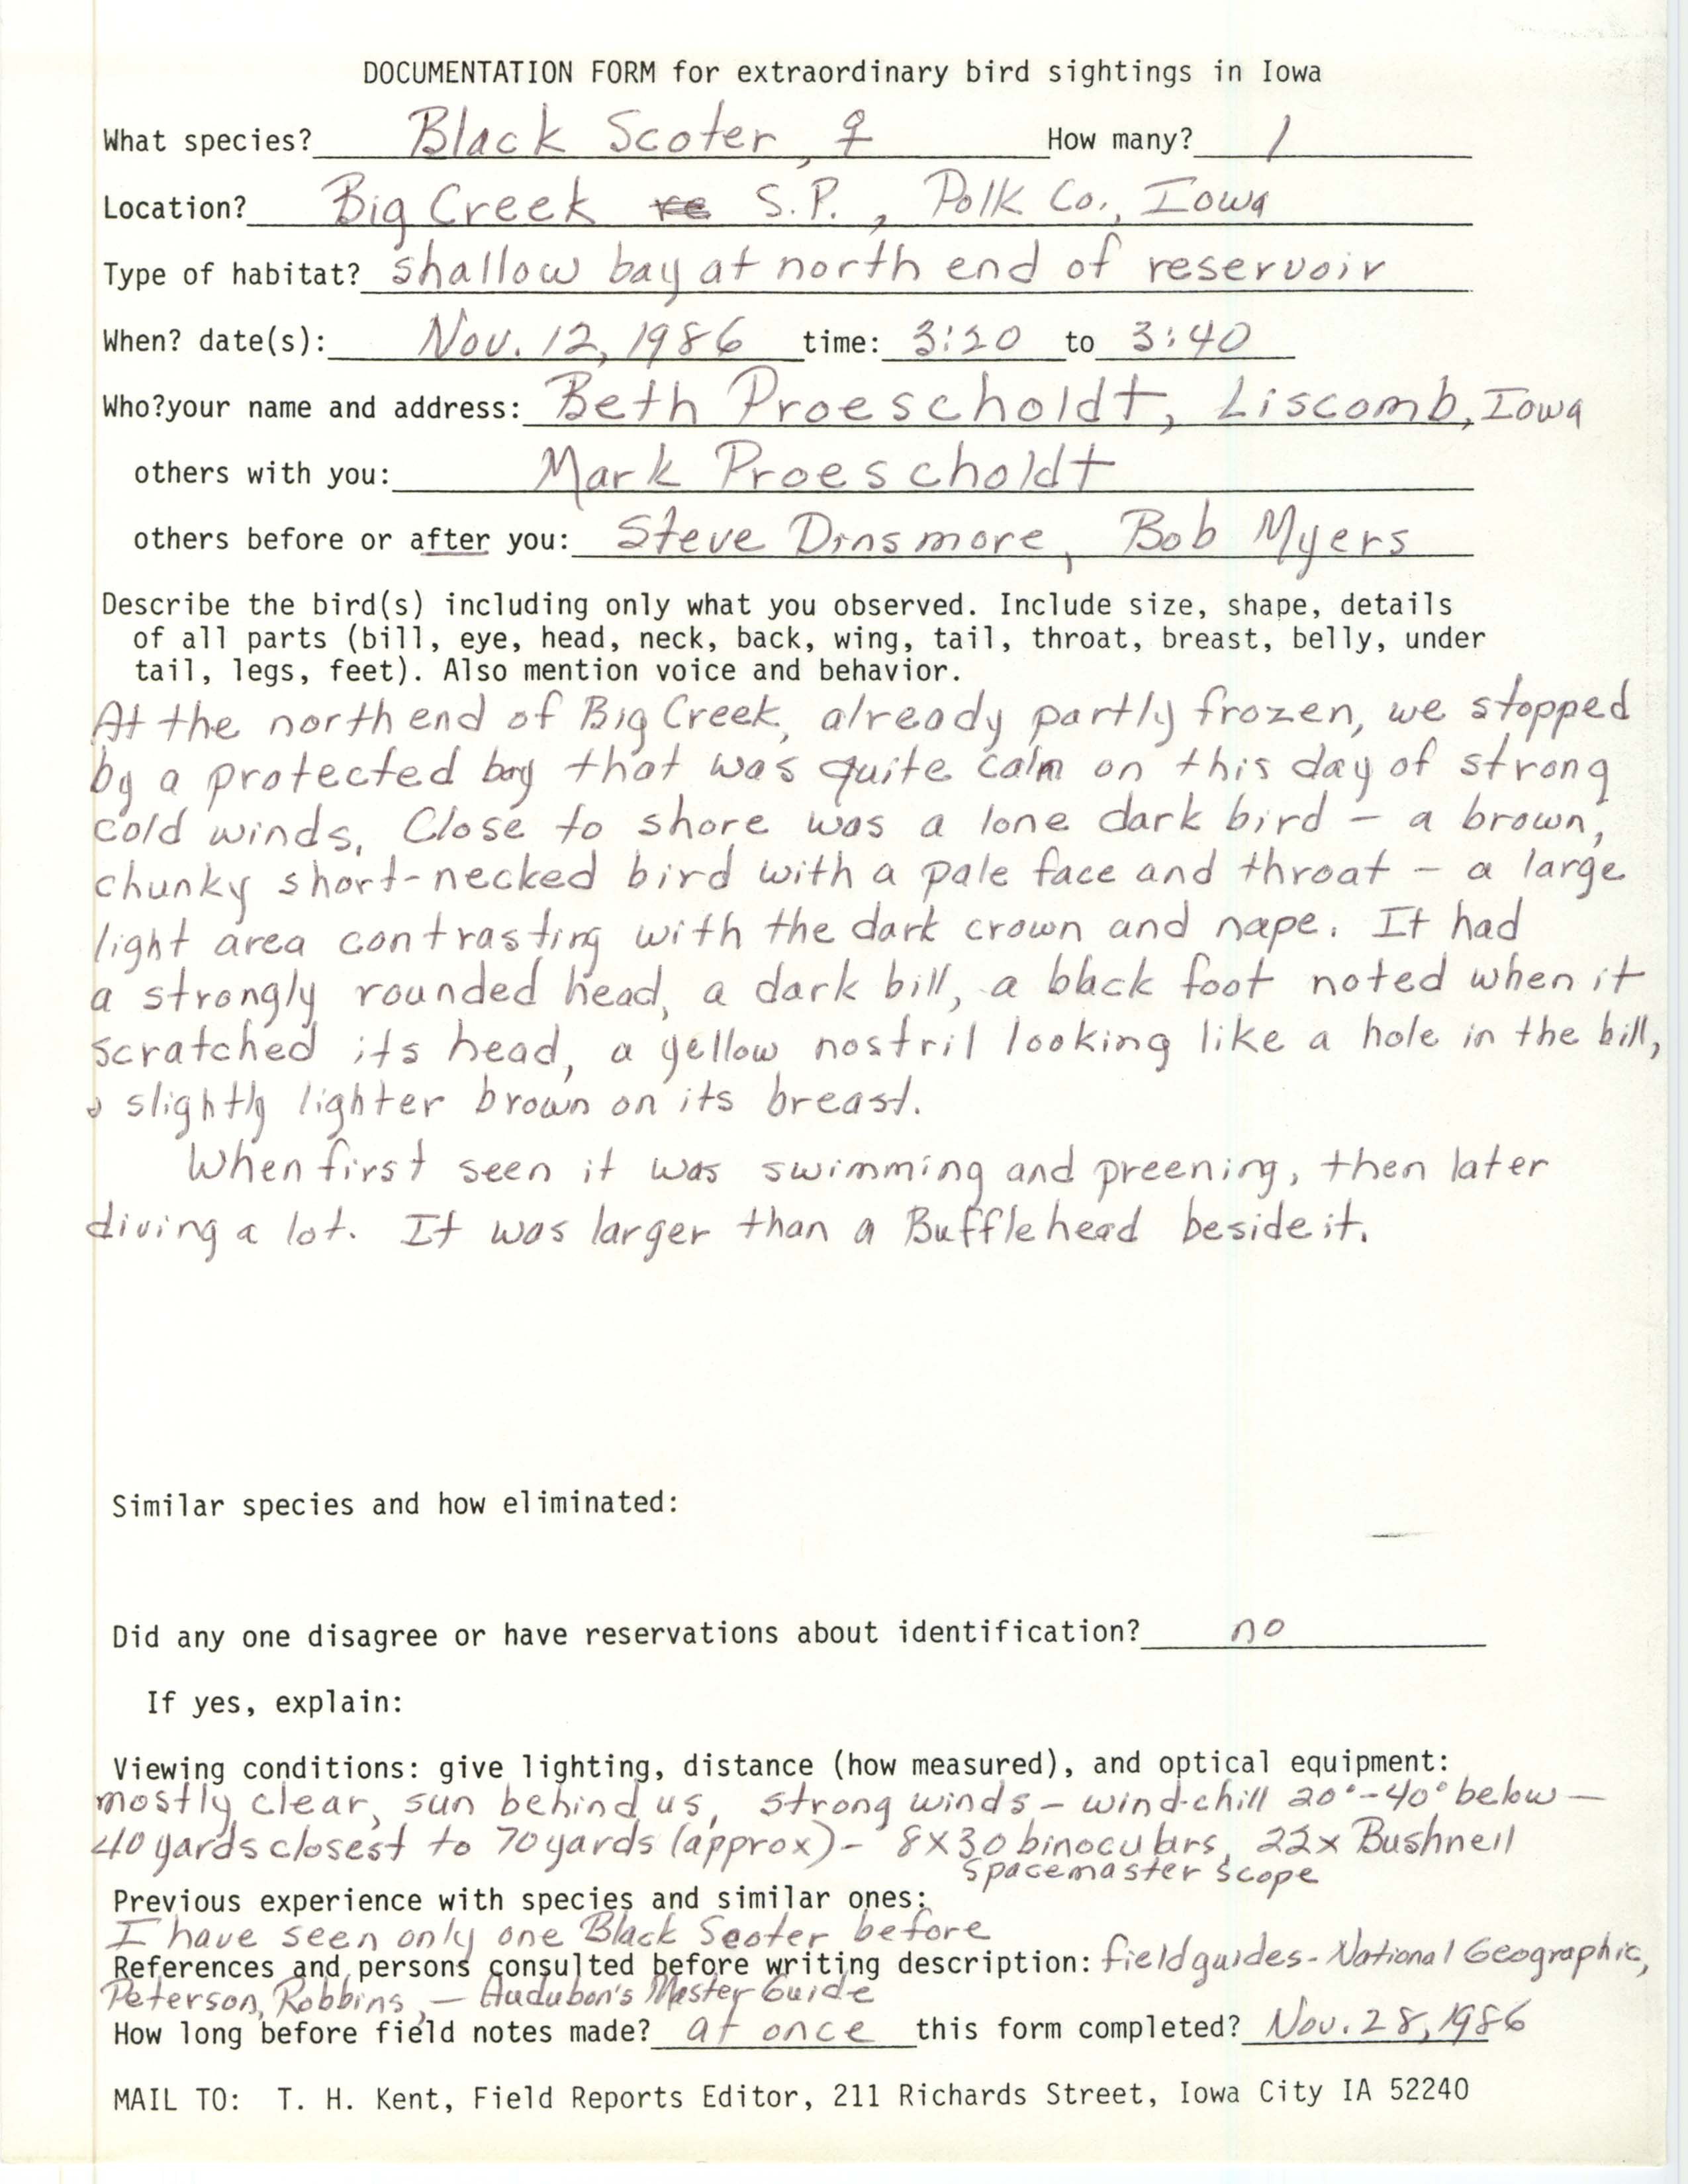 Rare bird documentation form for Black Scoter at Big Creek State Park in 1986